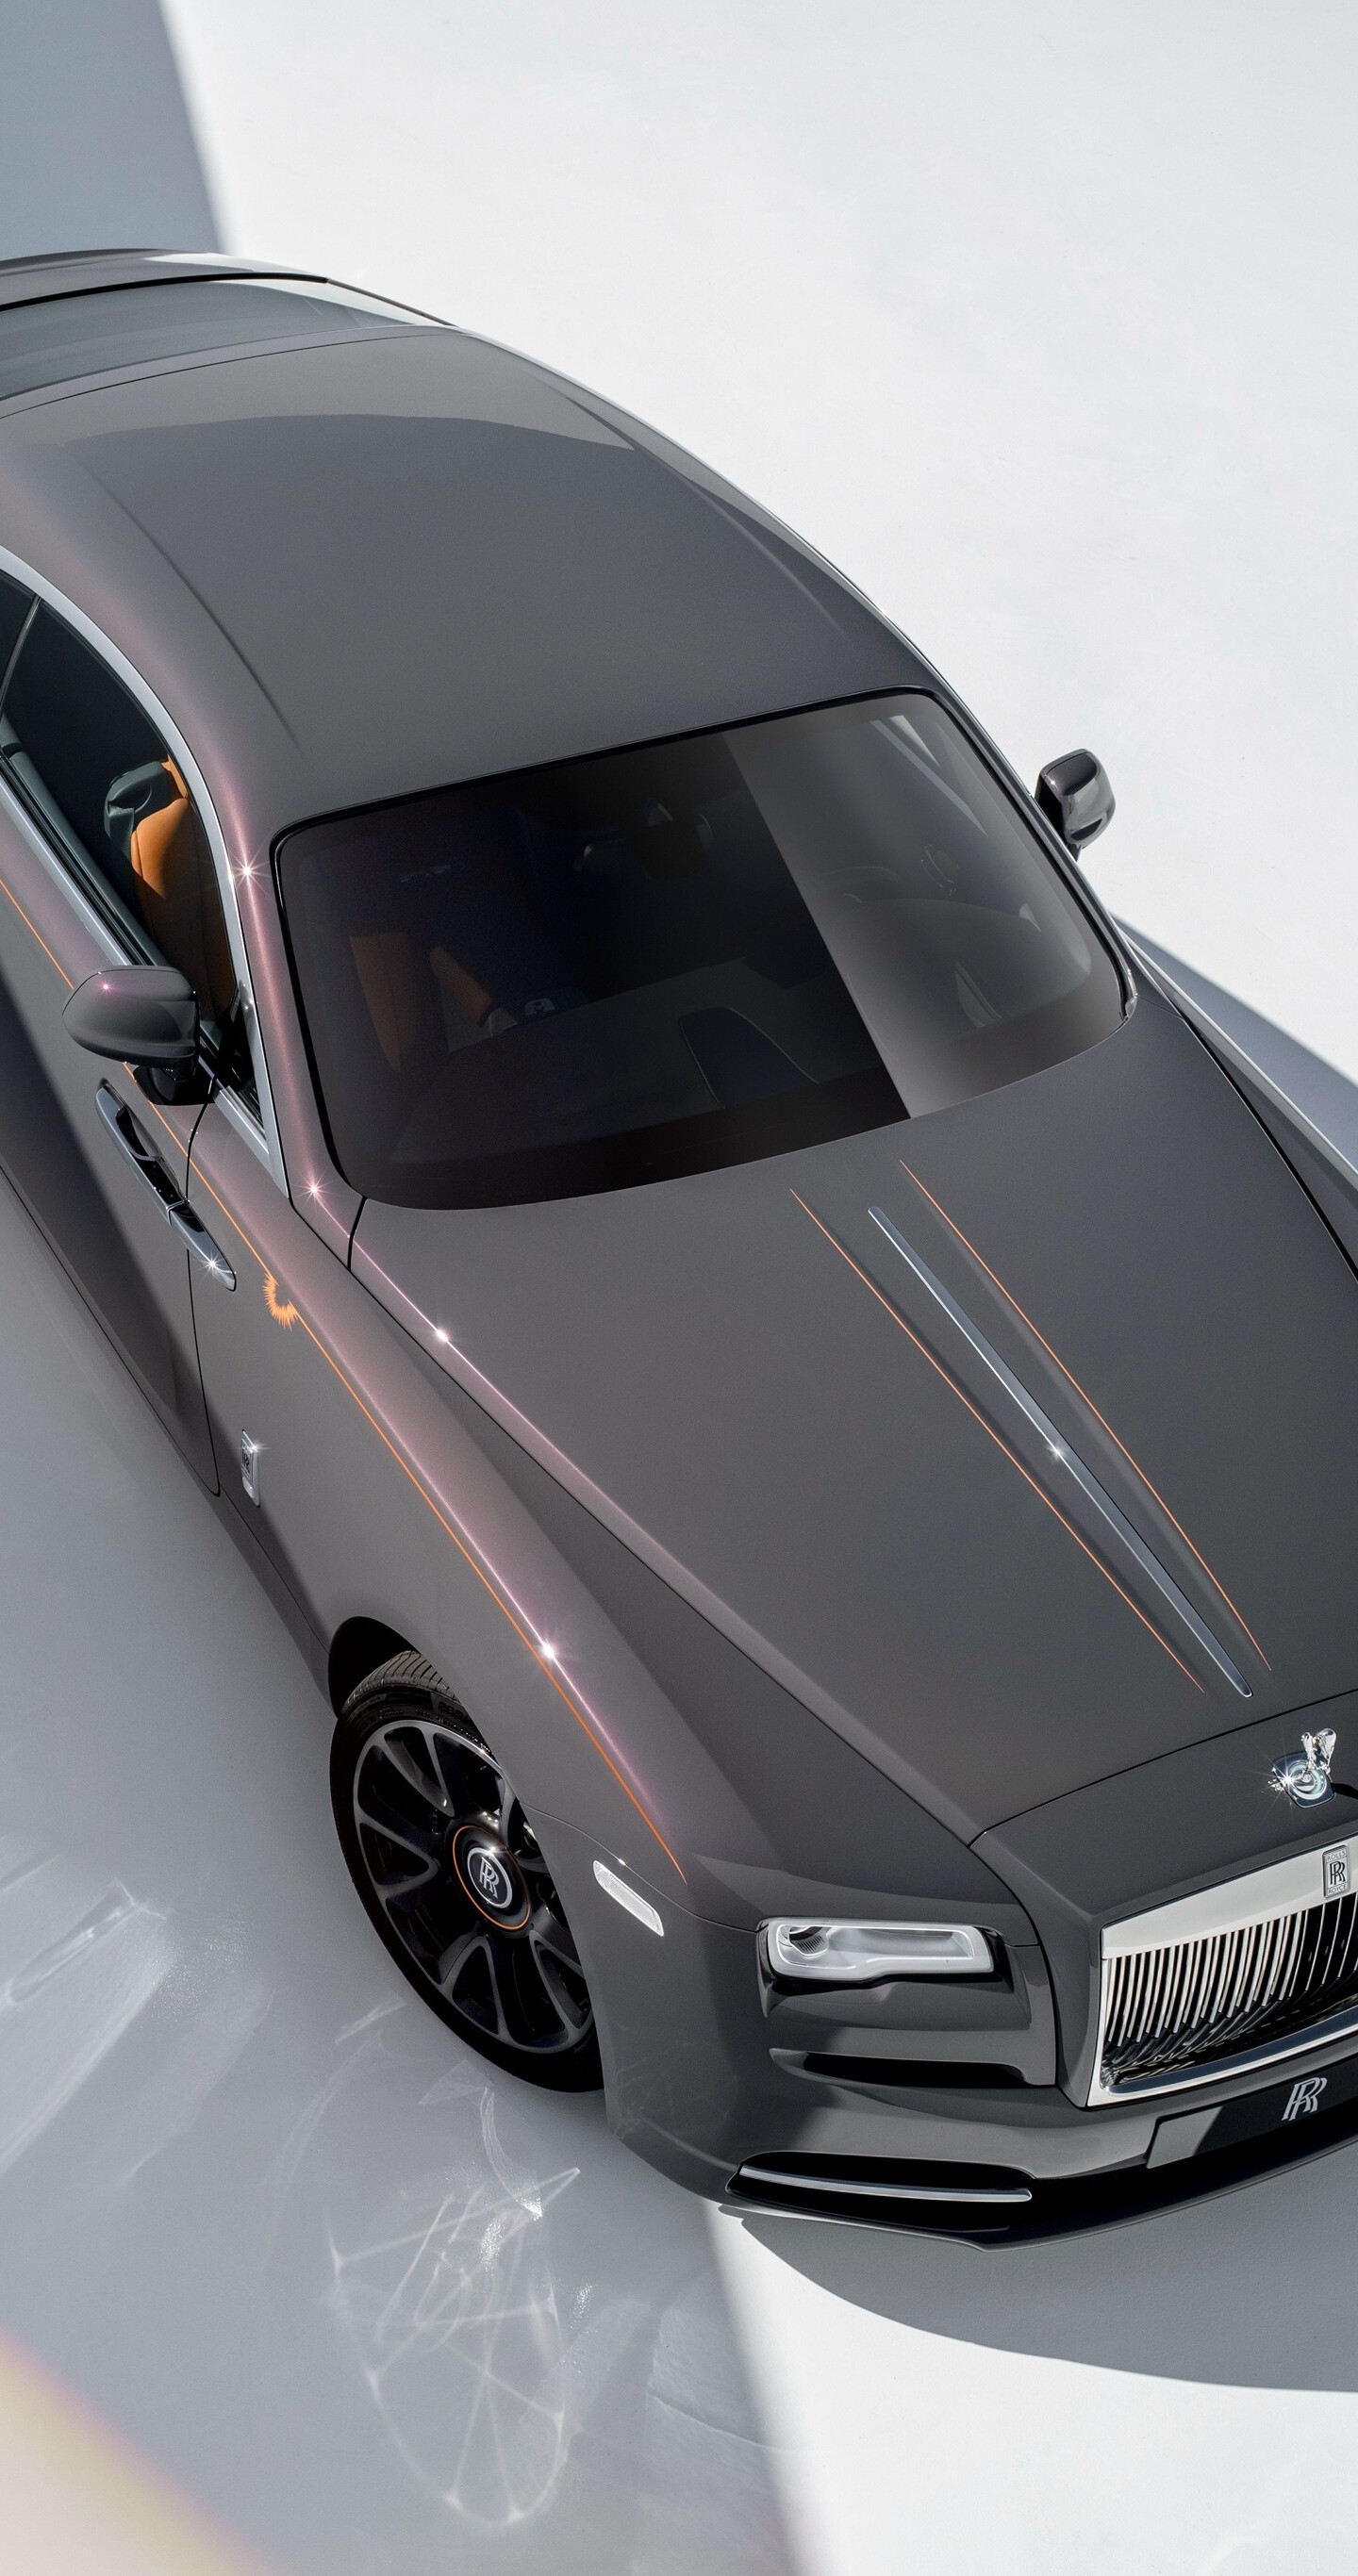 Rolls-Royce: Model Wraith Luminary Collection, luxurious car. 1440x2740 HD Wallpaper.